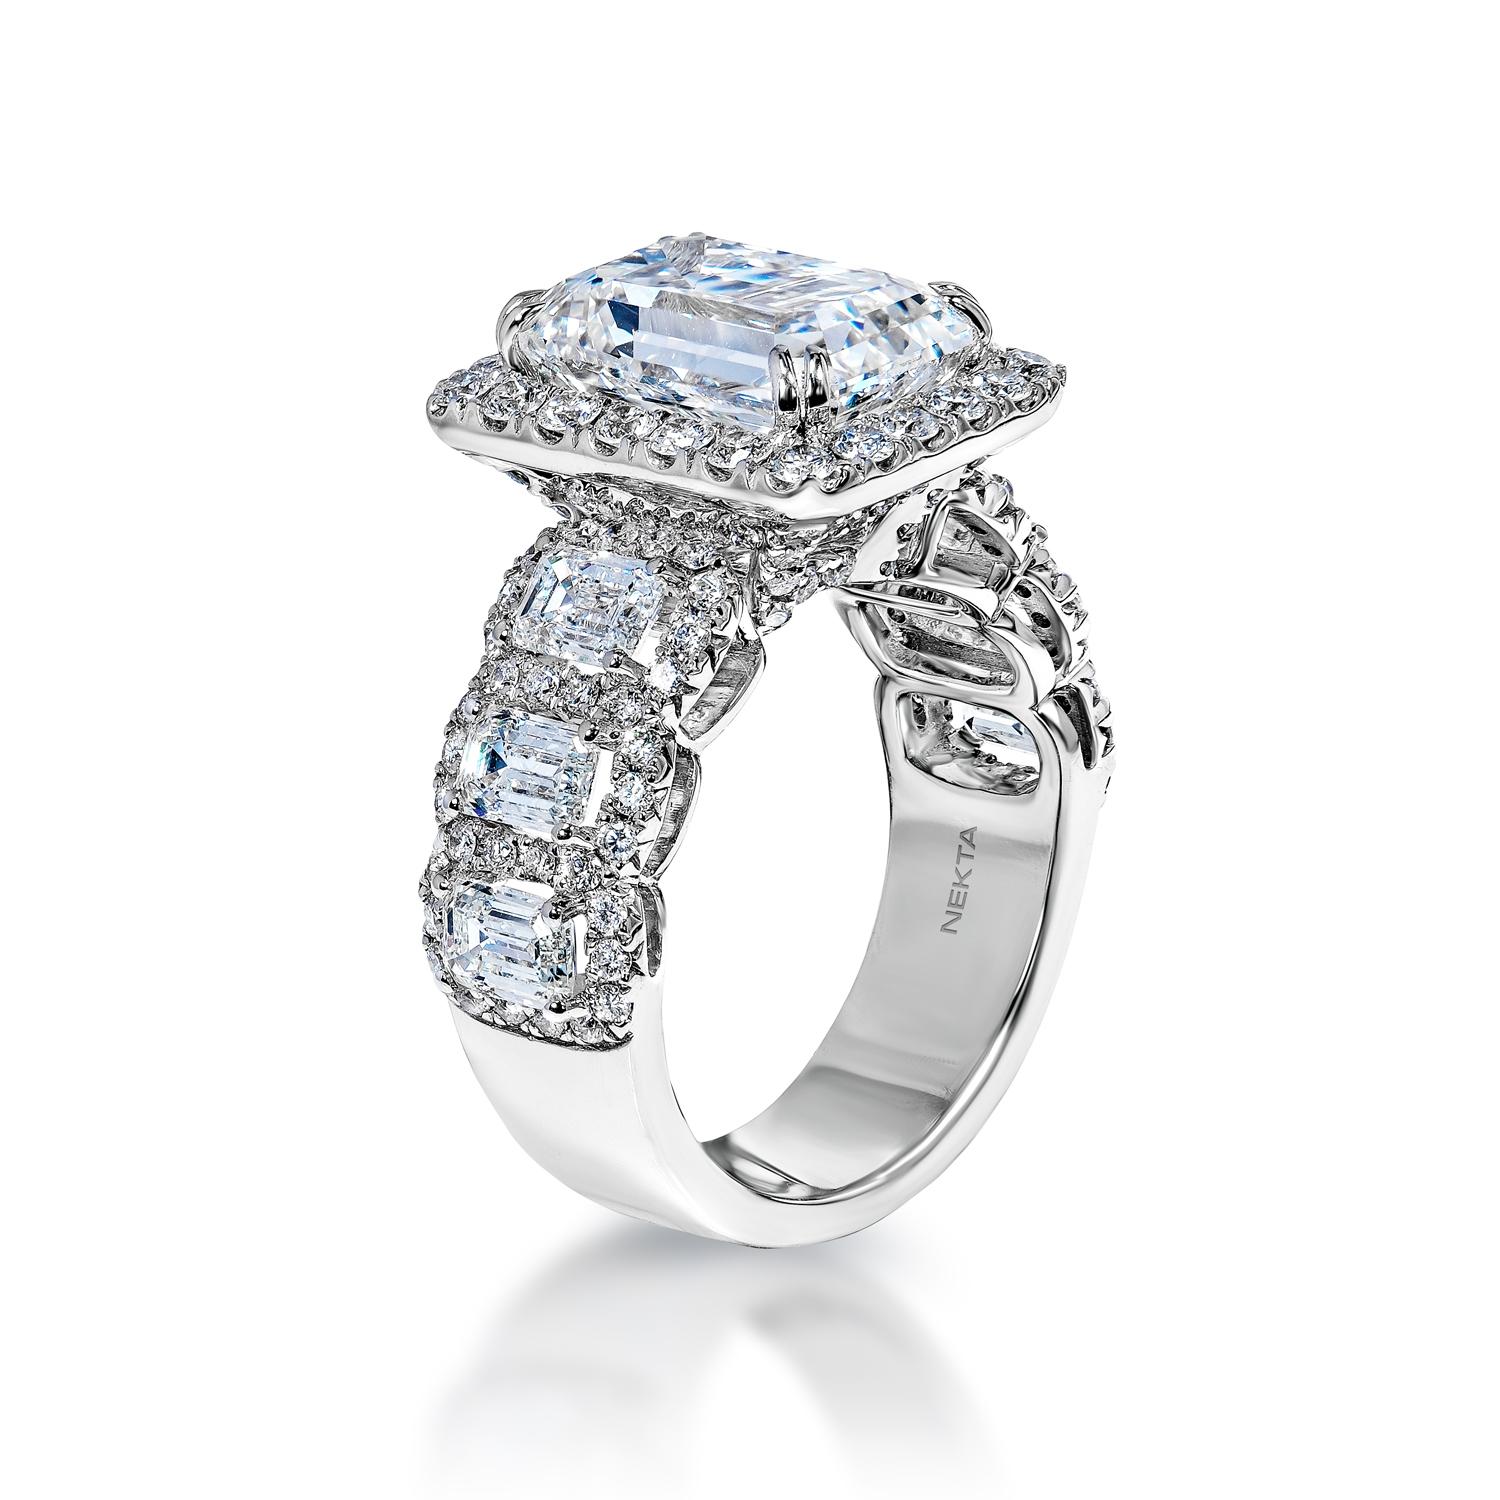 8 carat emerald cut diamond ring